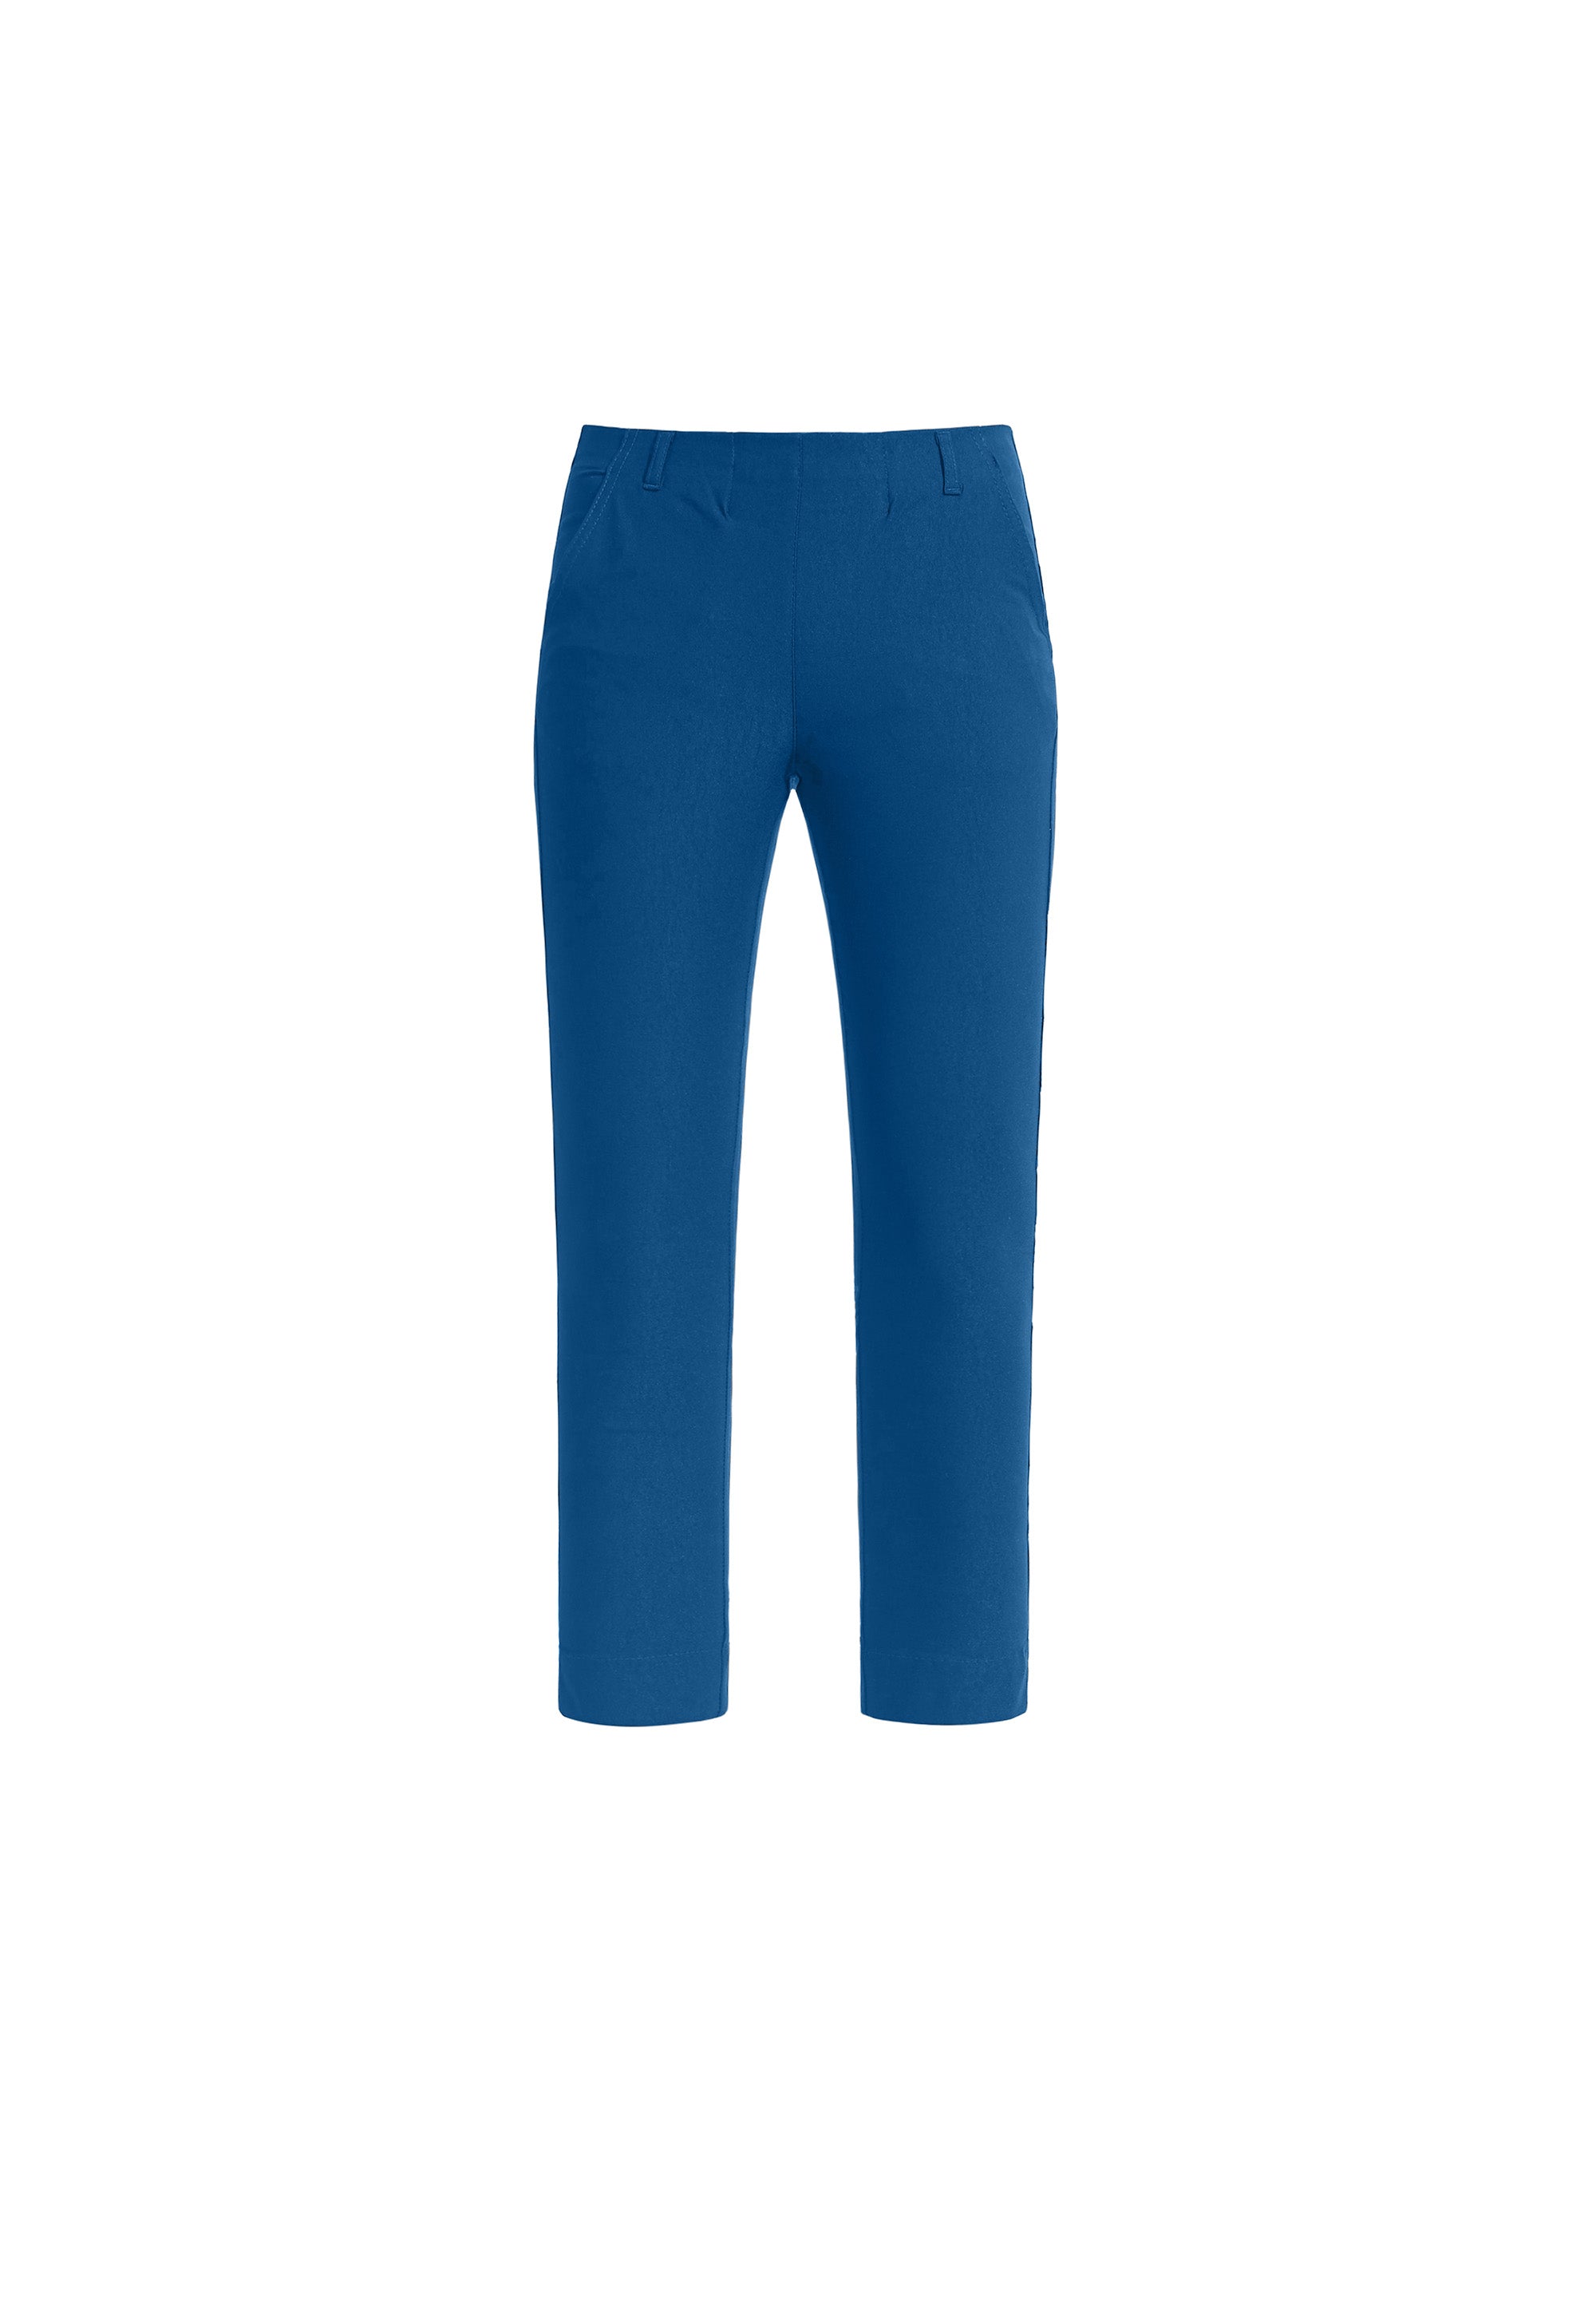 LAURIE Taylor Regular Crop Trousers REGULAR 45000 True Blue